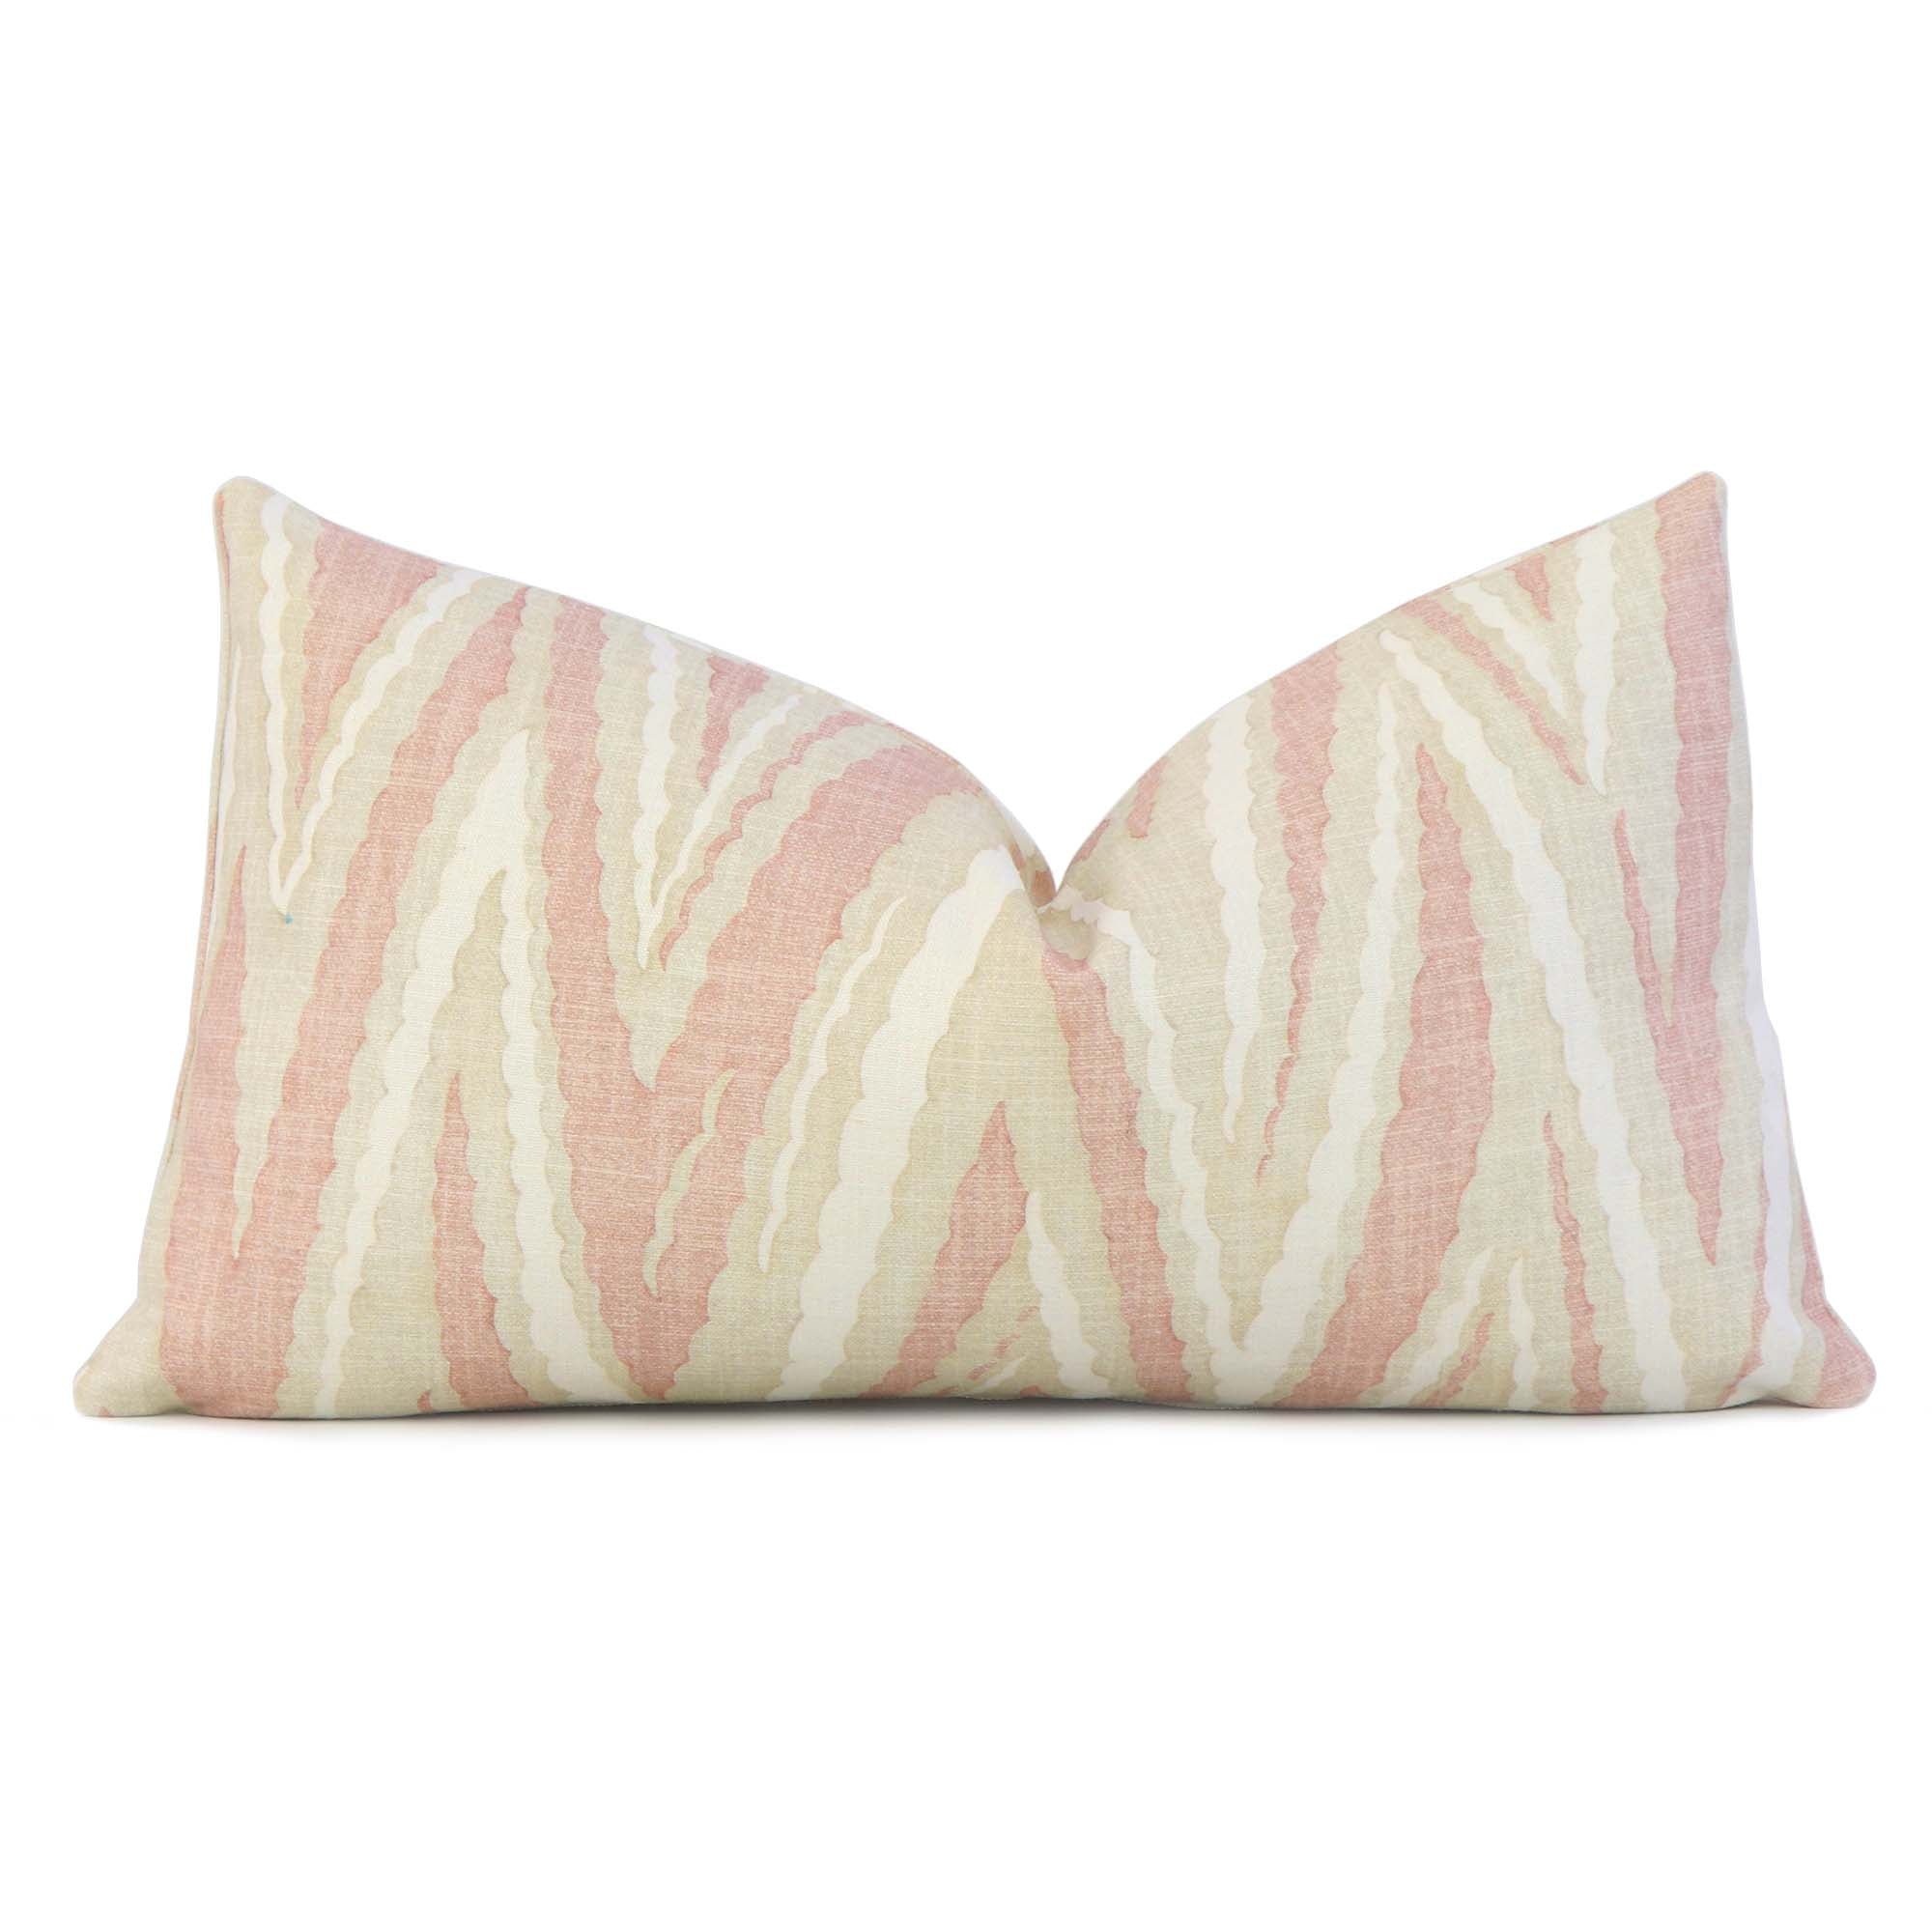 Thibaut Anna French Highland Peak Blush Pink Chevron Linen Designer Decorative Lumbar Throw Pillow Cover 